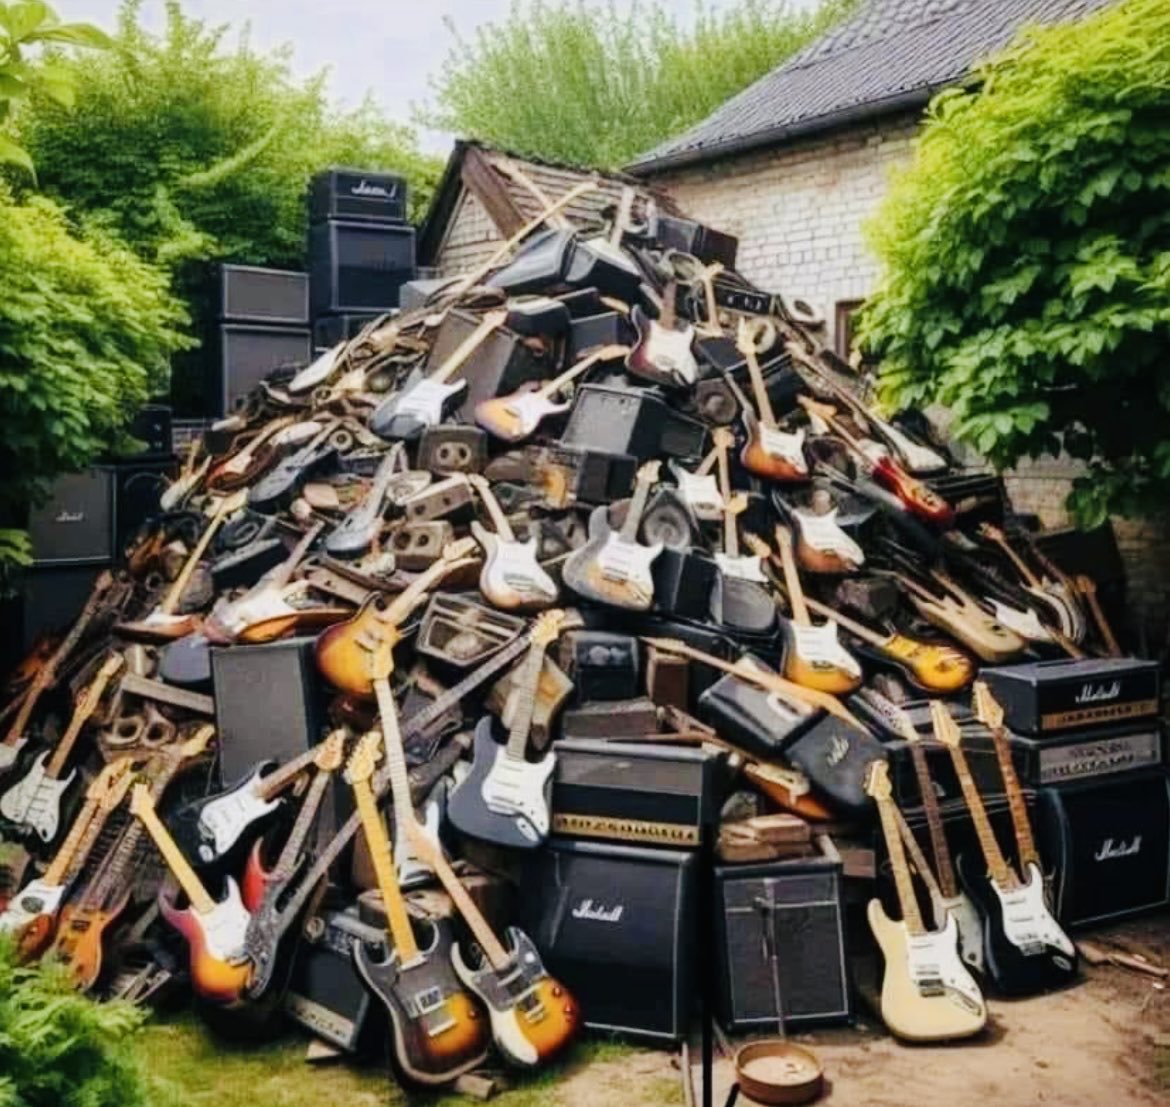 Imagine seeing this on your street? #guitar #electricguitar #amp #amplifier #marshall #marshallamps #bigpile #bonfire #music